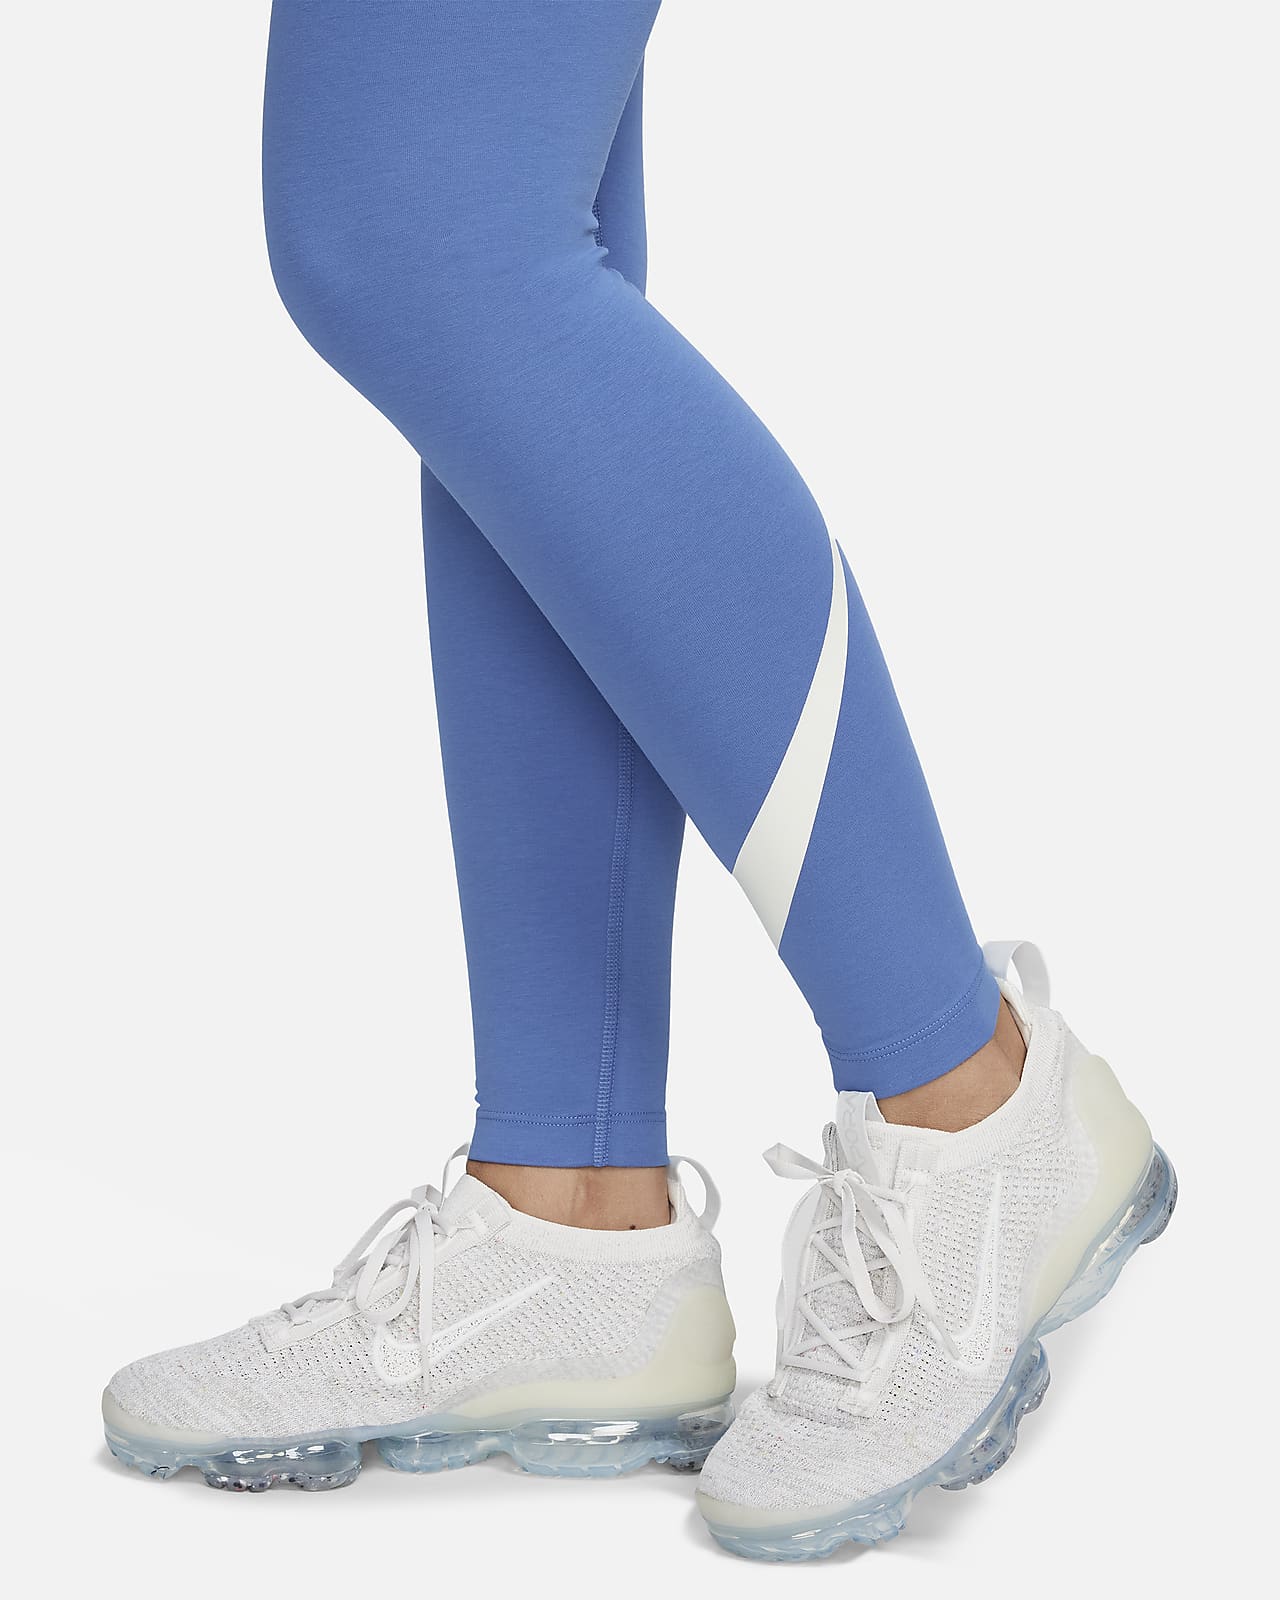 Nike Sportswear Classics Women's Graphic High-Waisted Leggings.